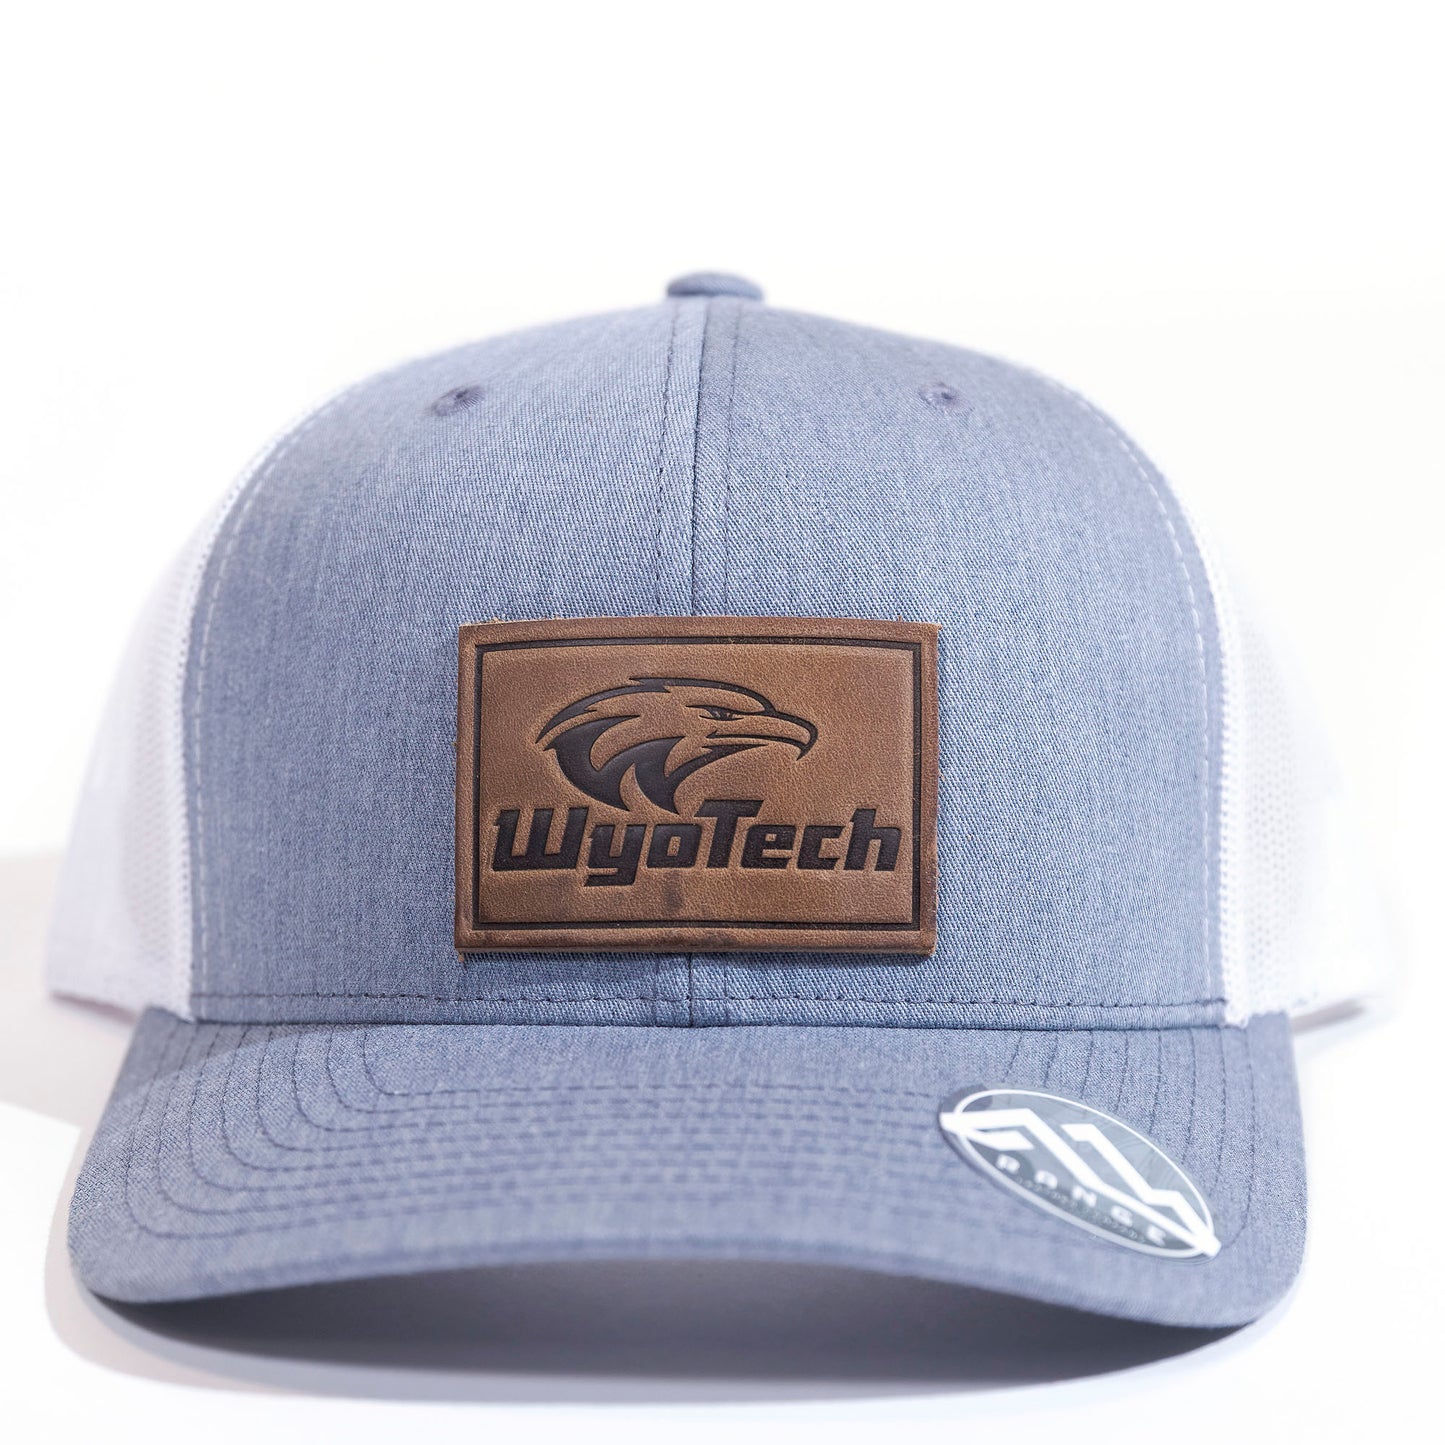 Range Leather WyoTech Cap